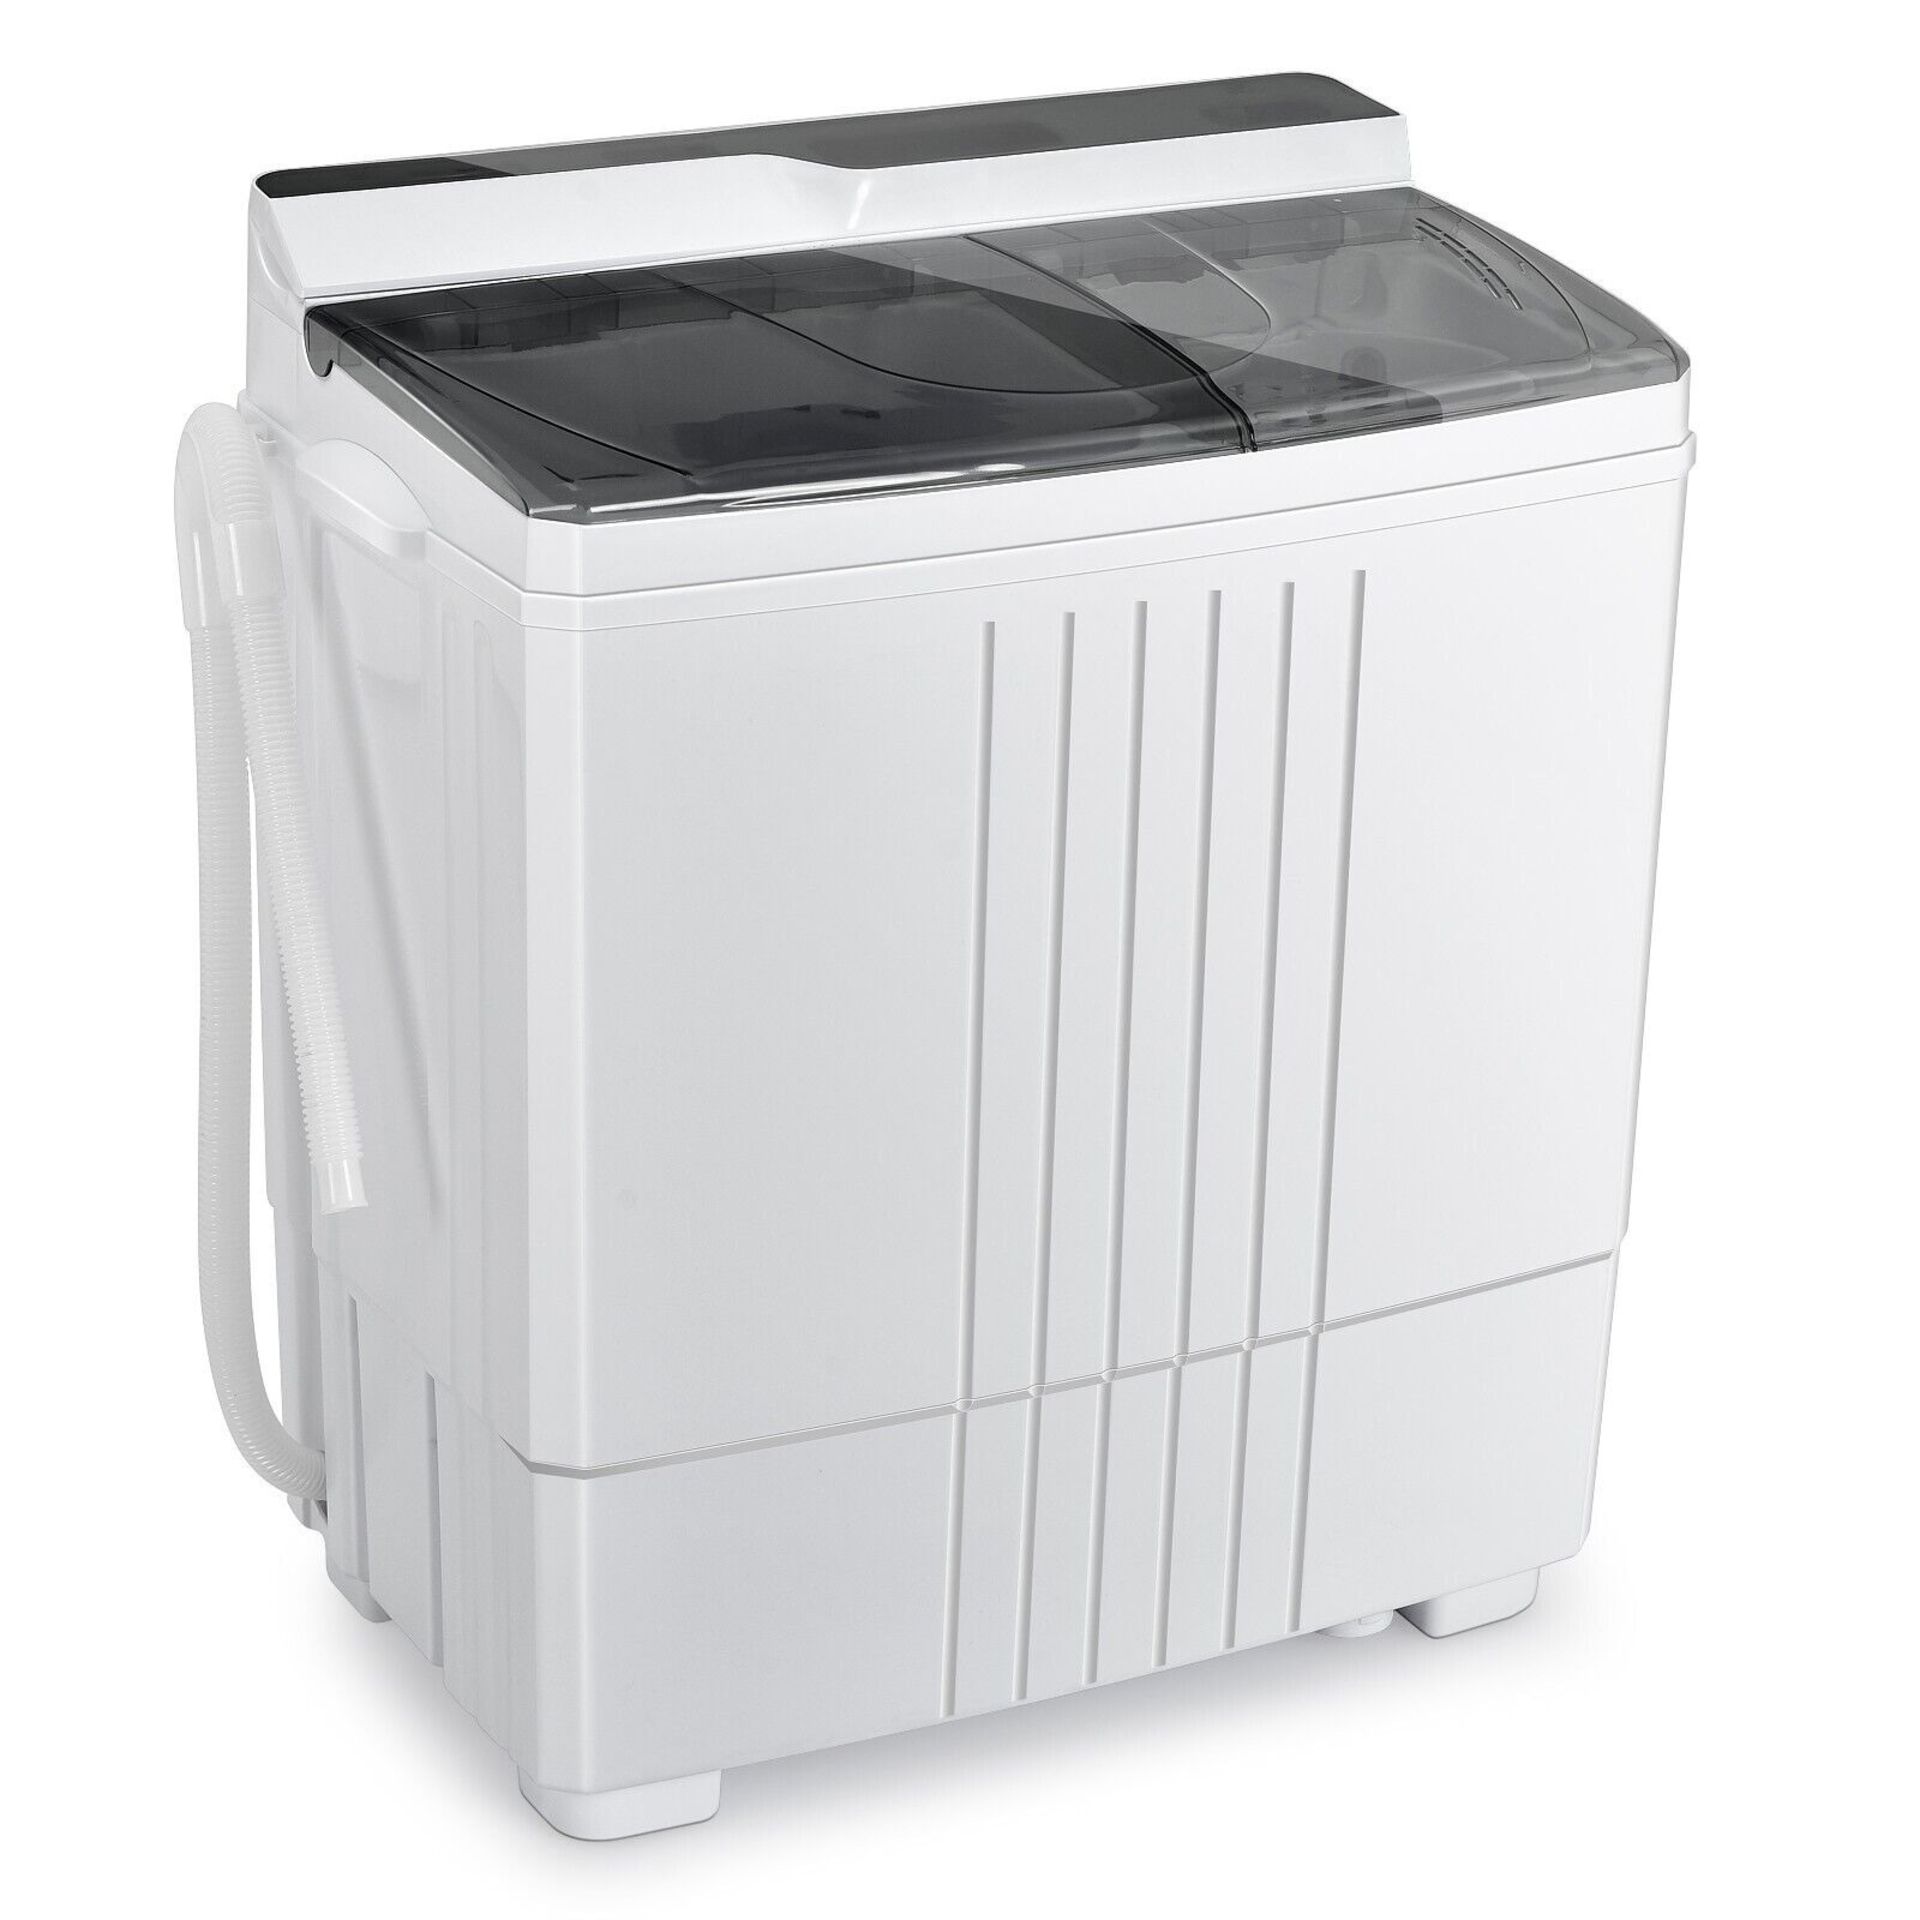 Twin Tub Portable Washing Machine with 1.5KG Capacity Dryer-Grey - ER53